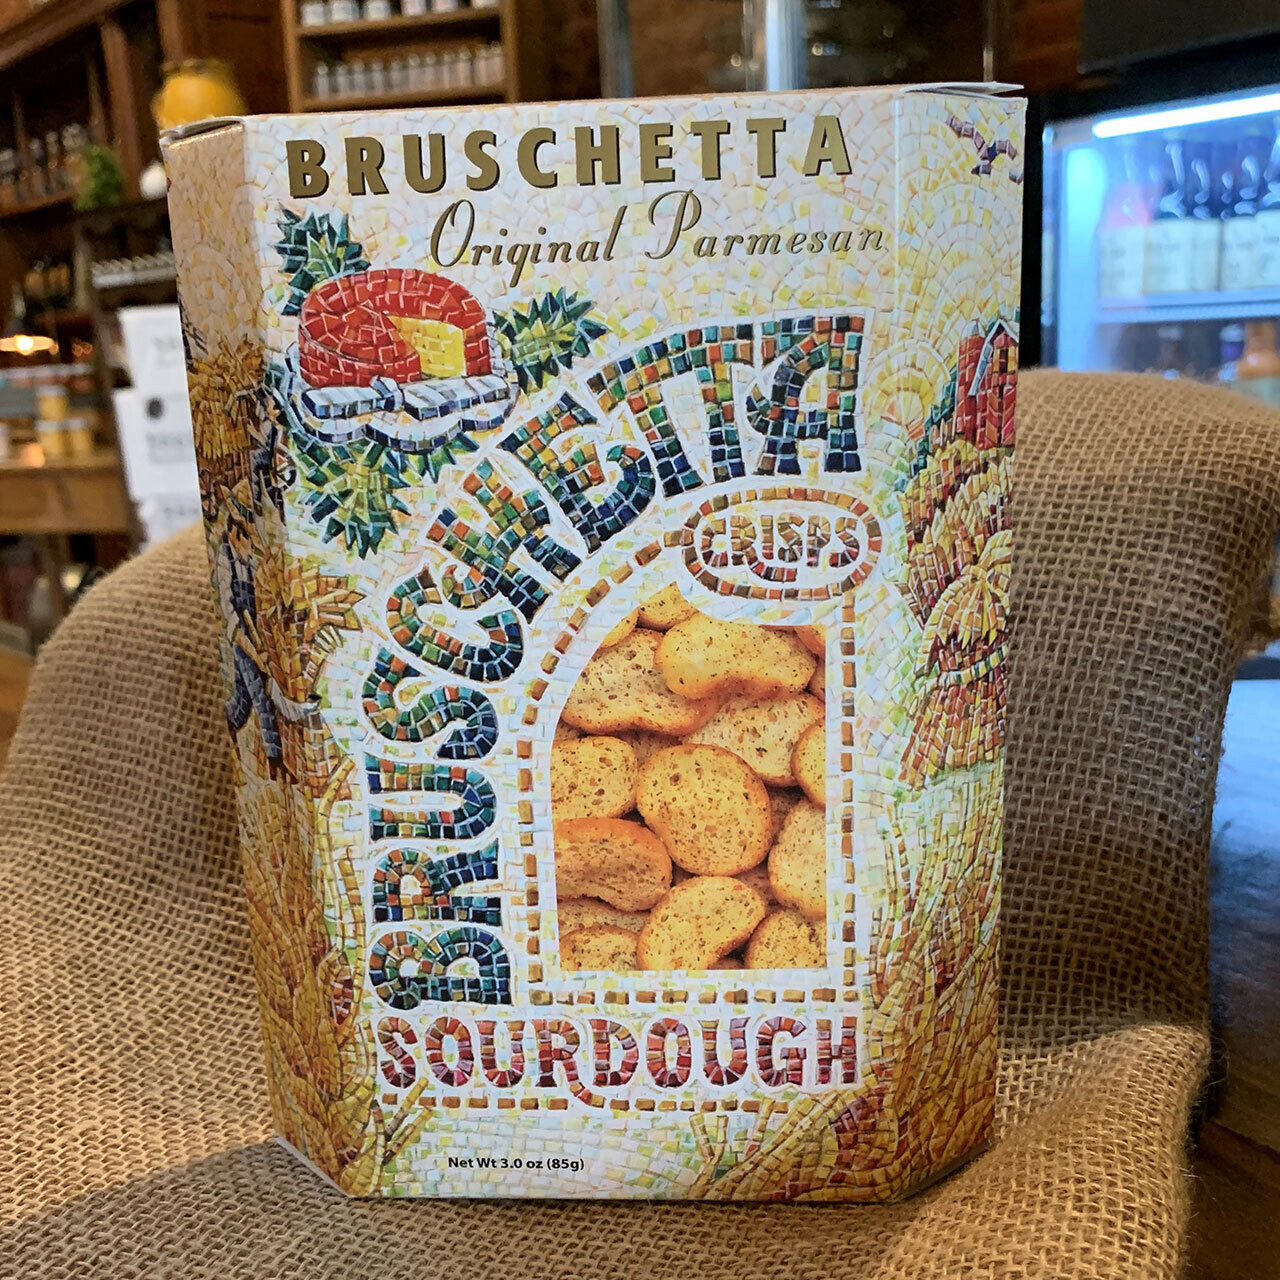 Bruschetta Sourdough Crisps